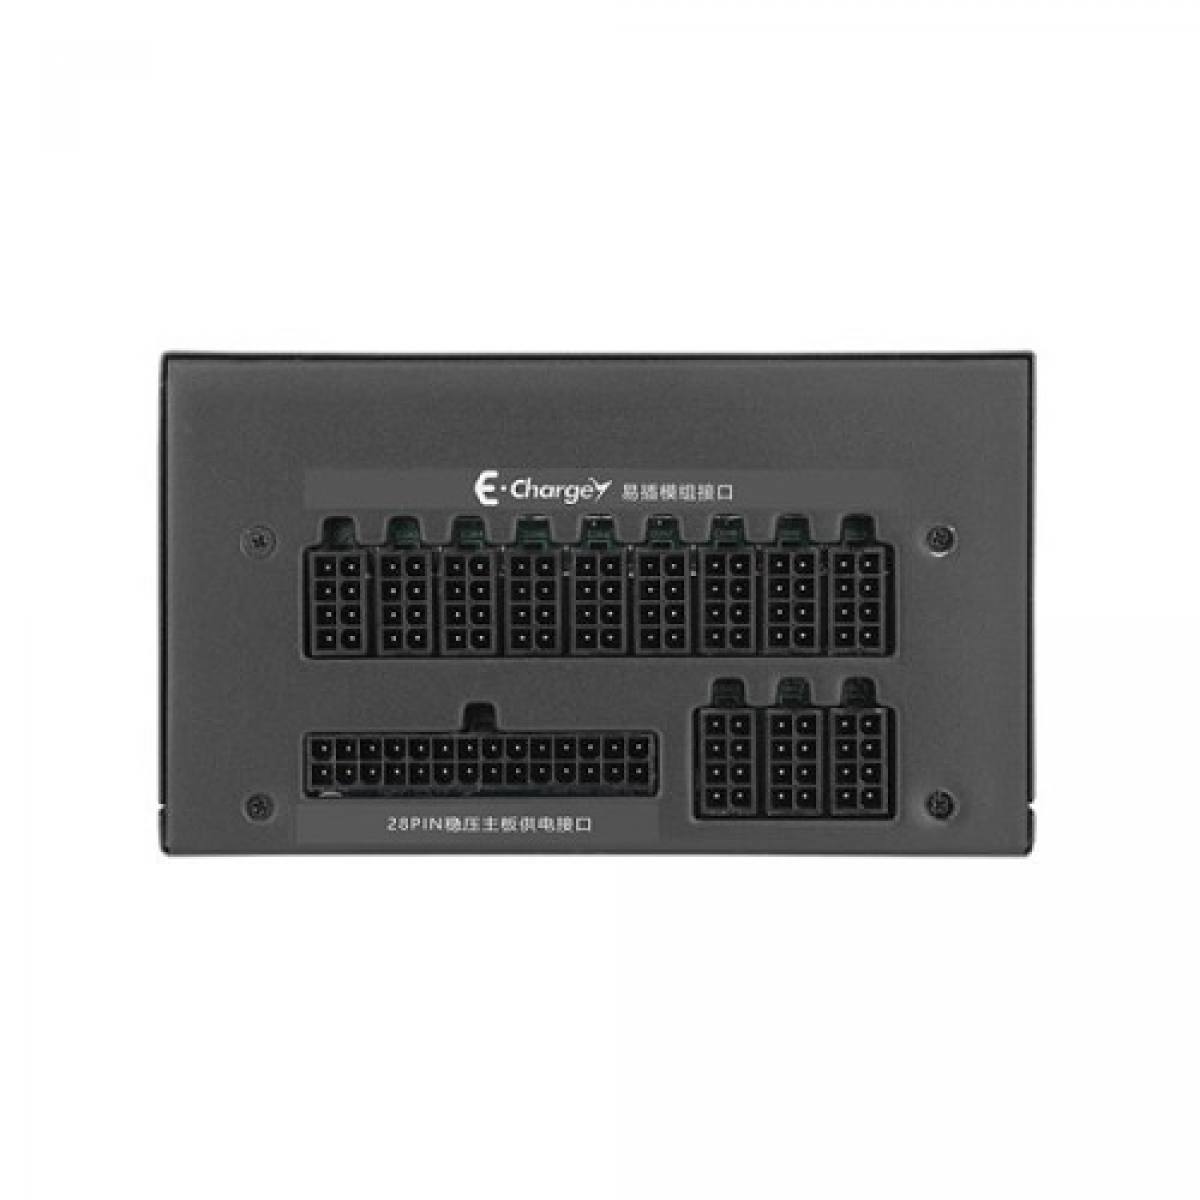 Nguồn máy tính SEGOTEP SG-650AE (AP550W-80PLUS)